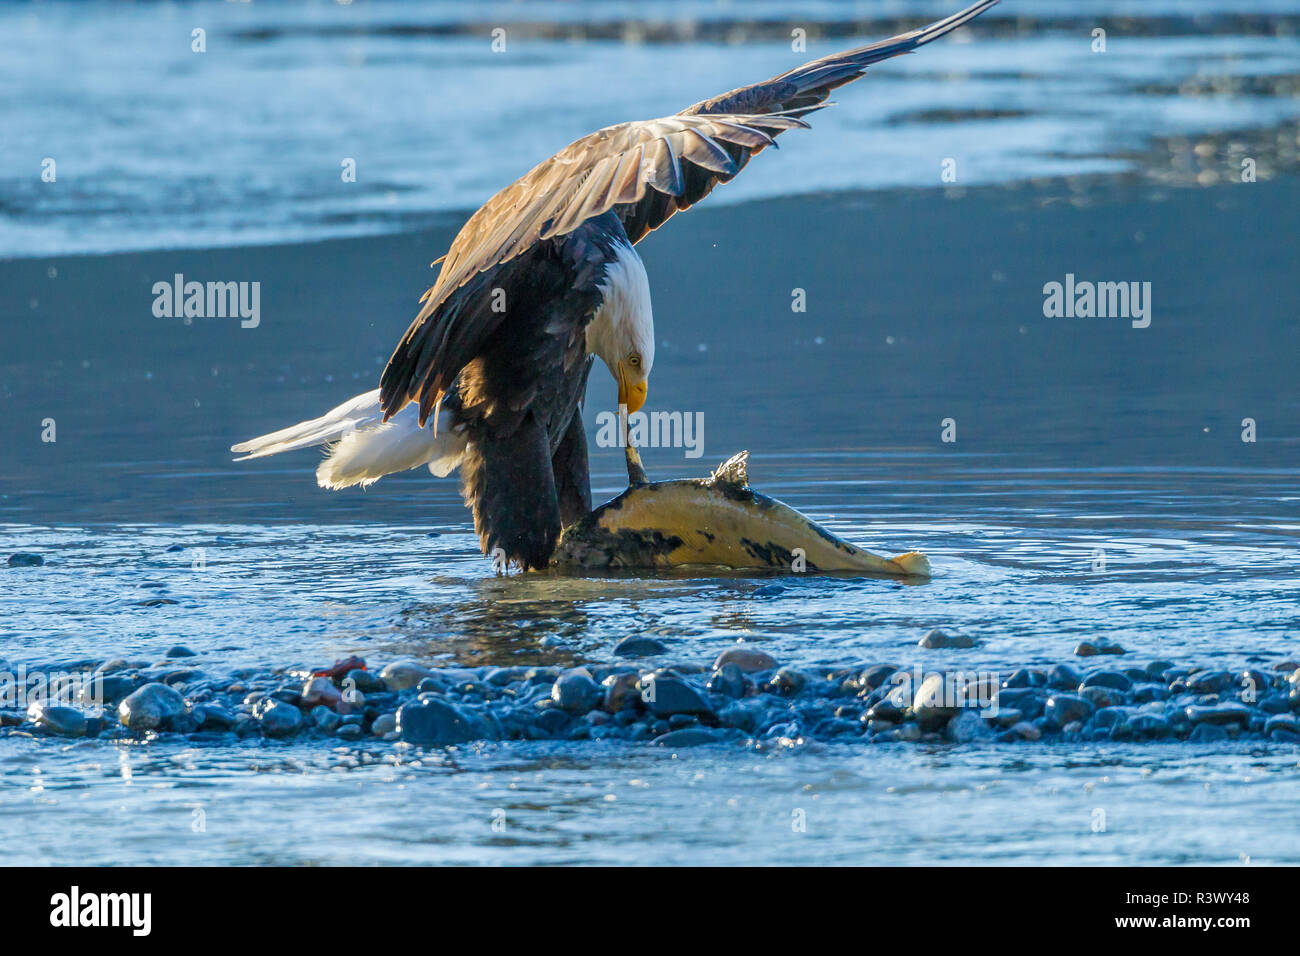 USA, Alaska, Chilkat Bald Eagle Preserve, bald eagle adult eating salmon Stock Photo